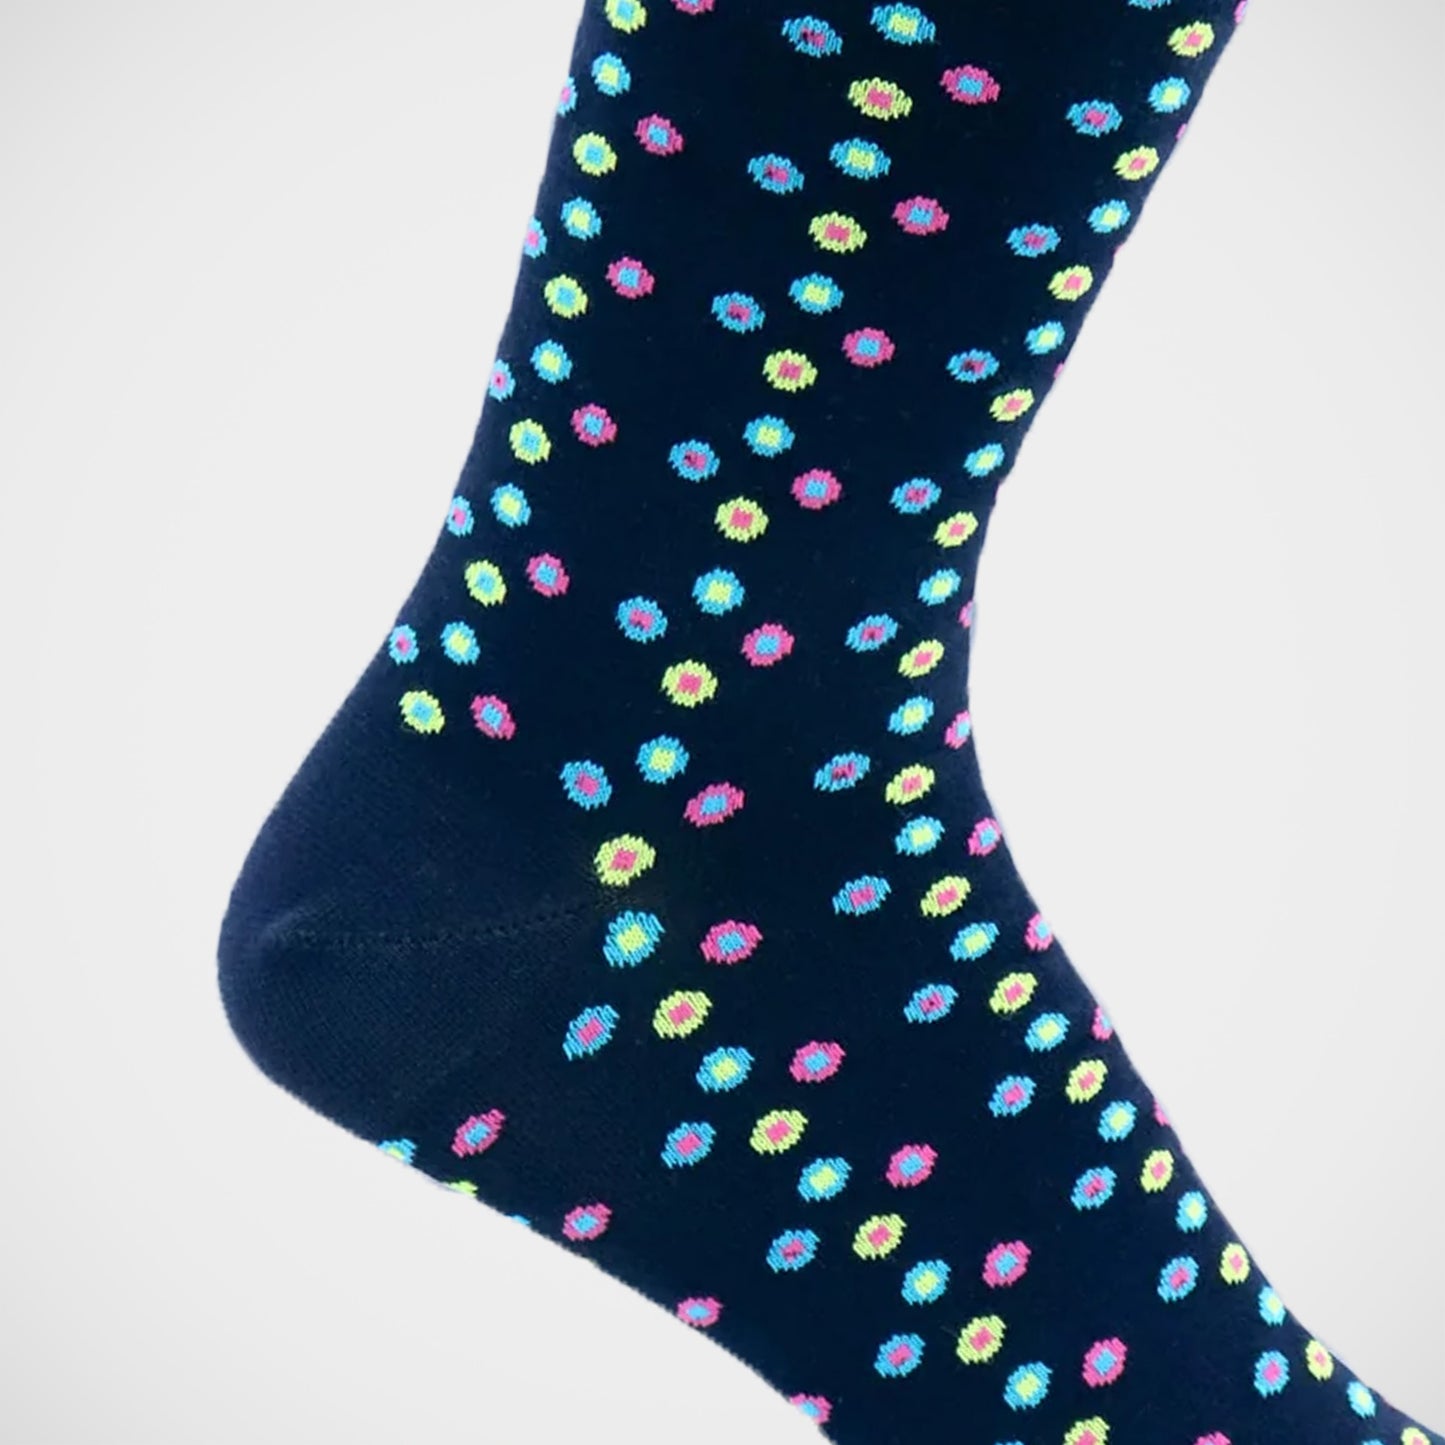 'Colourful Dots' Socks